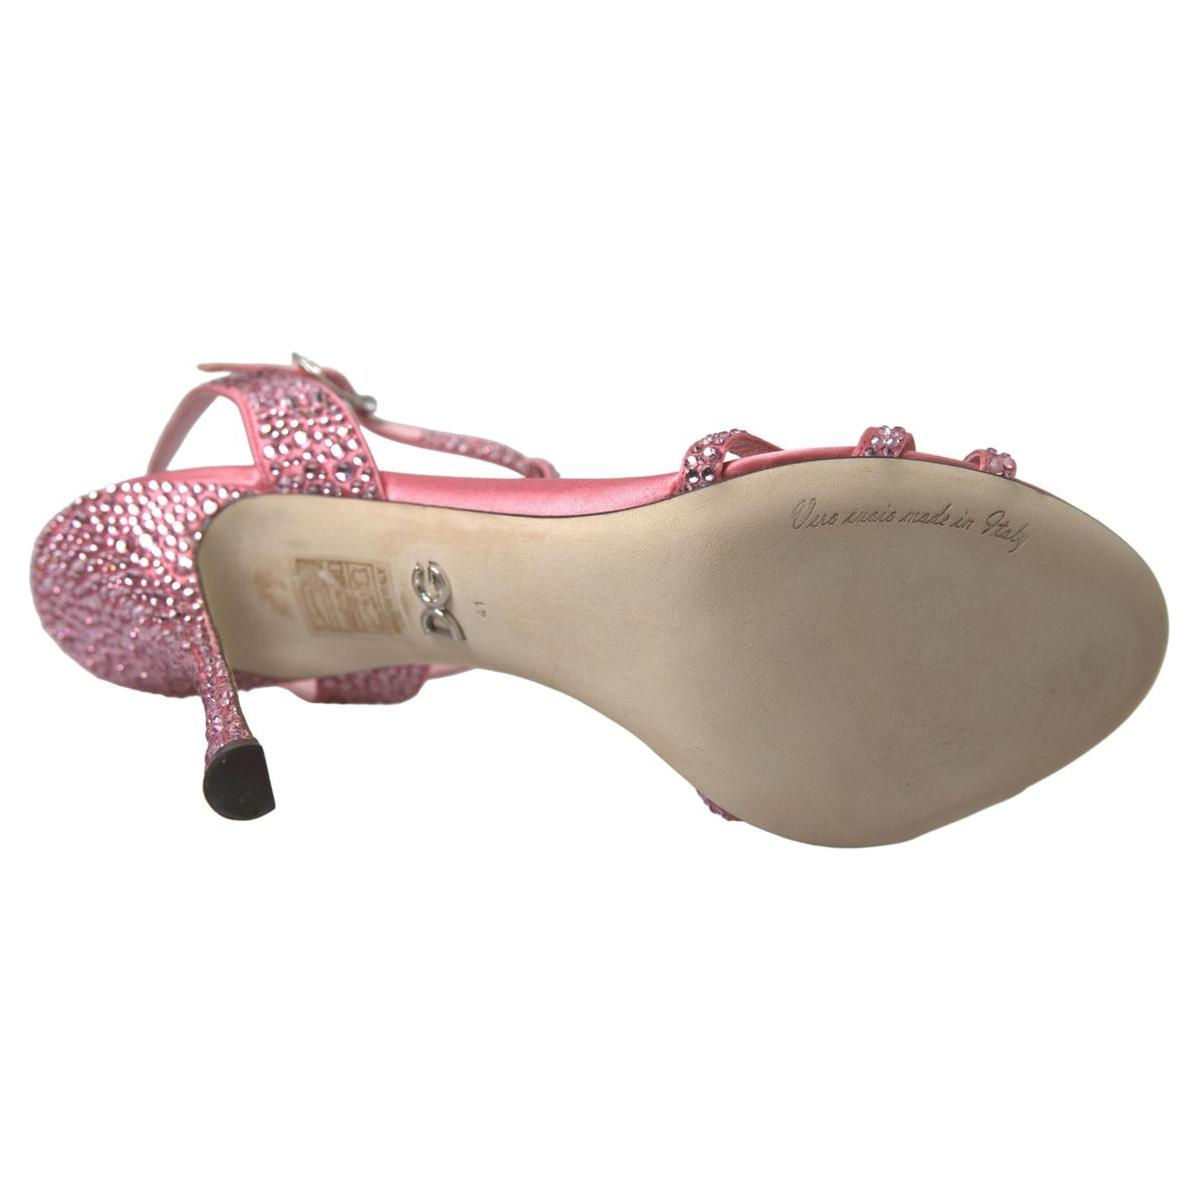 Dolce & Gabbana Elegant Pink Ankle Strap Sandals pink-crystal-ankle-strap-shoes-sandals 465A8847-scaled-8adc1f8d-884_9f09b4bd-0776-42df-a286-fe82f7e82d5d.jpg